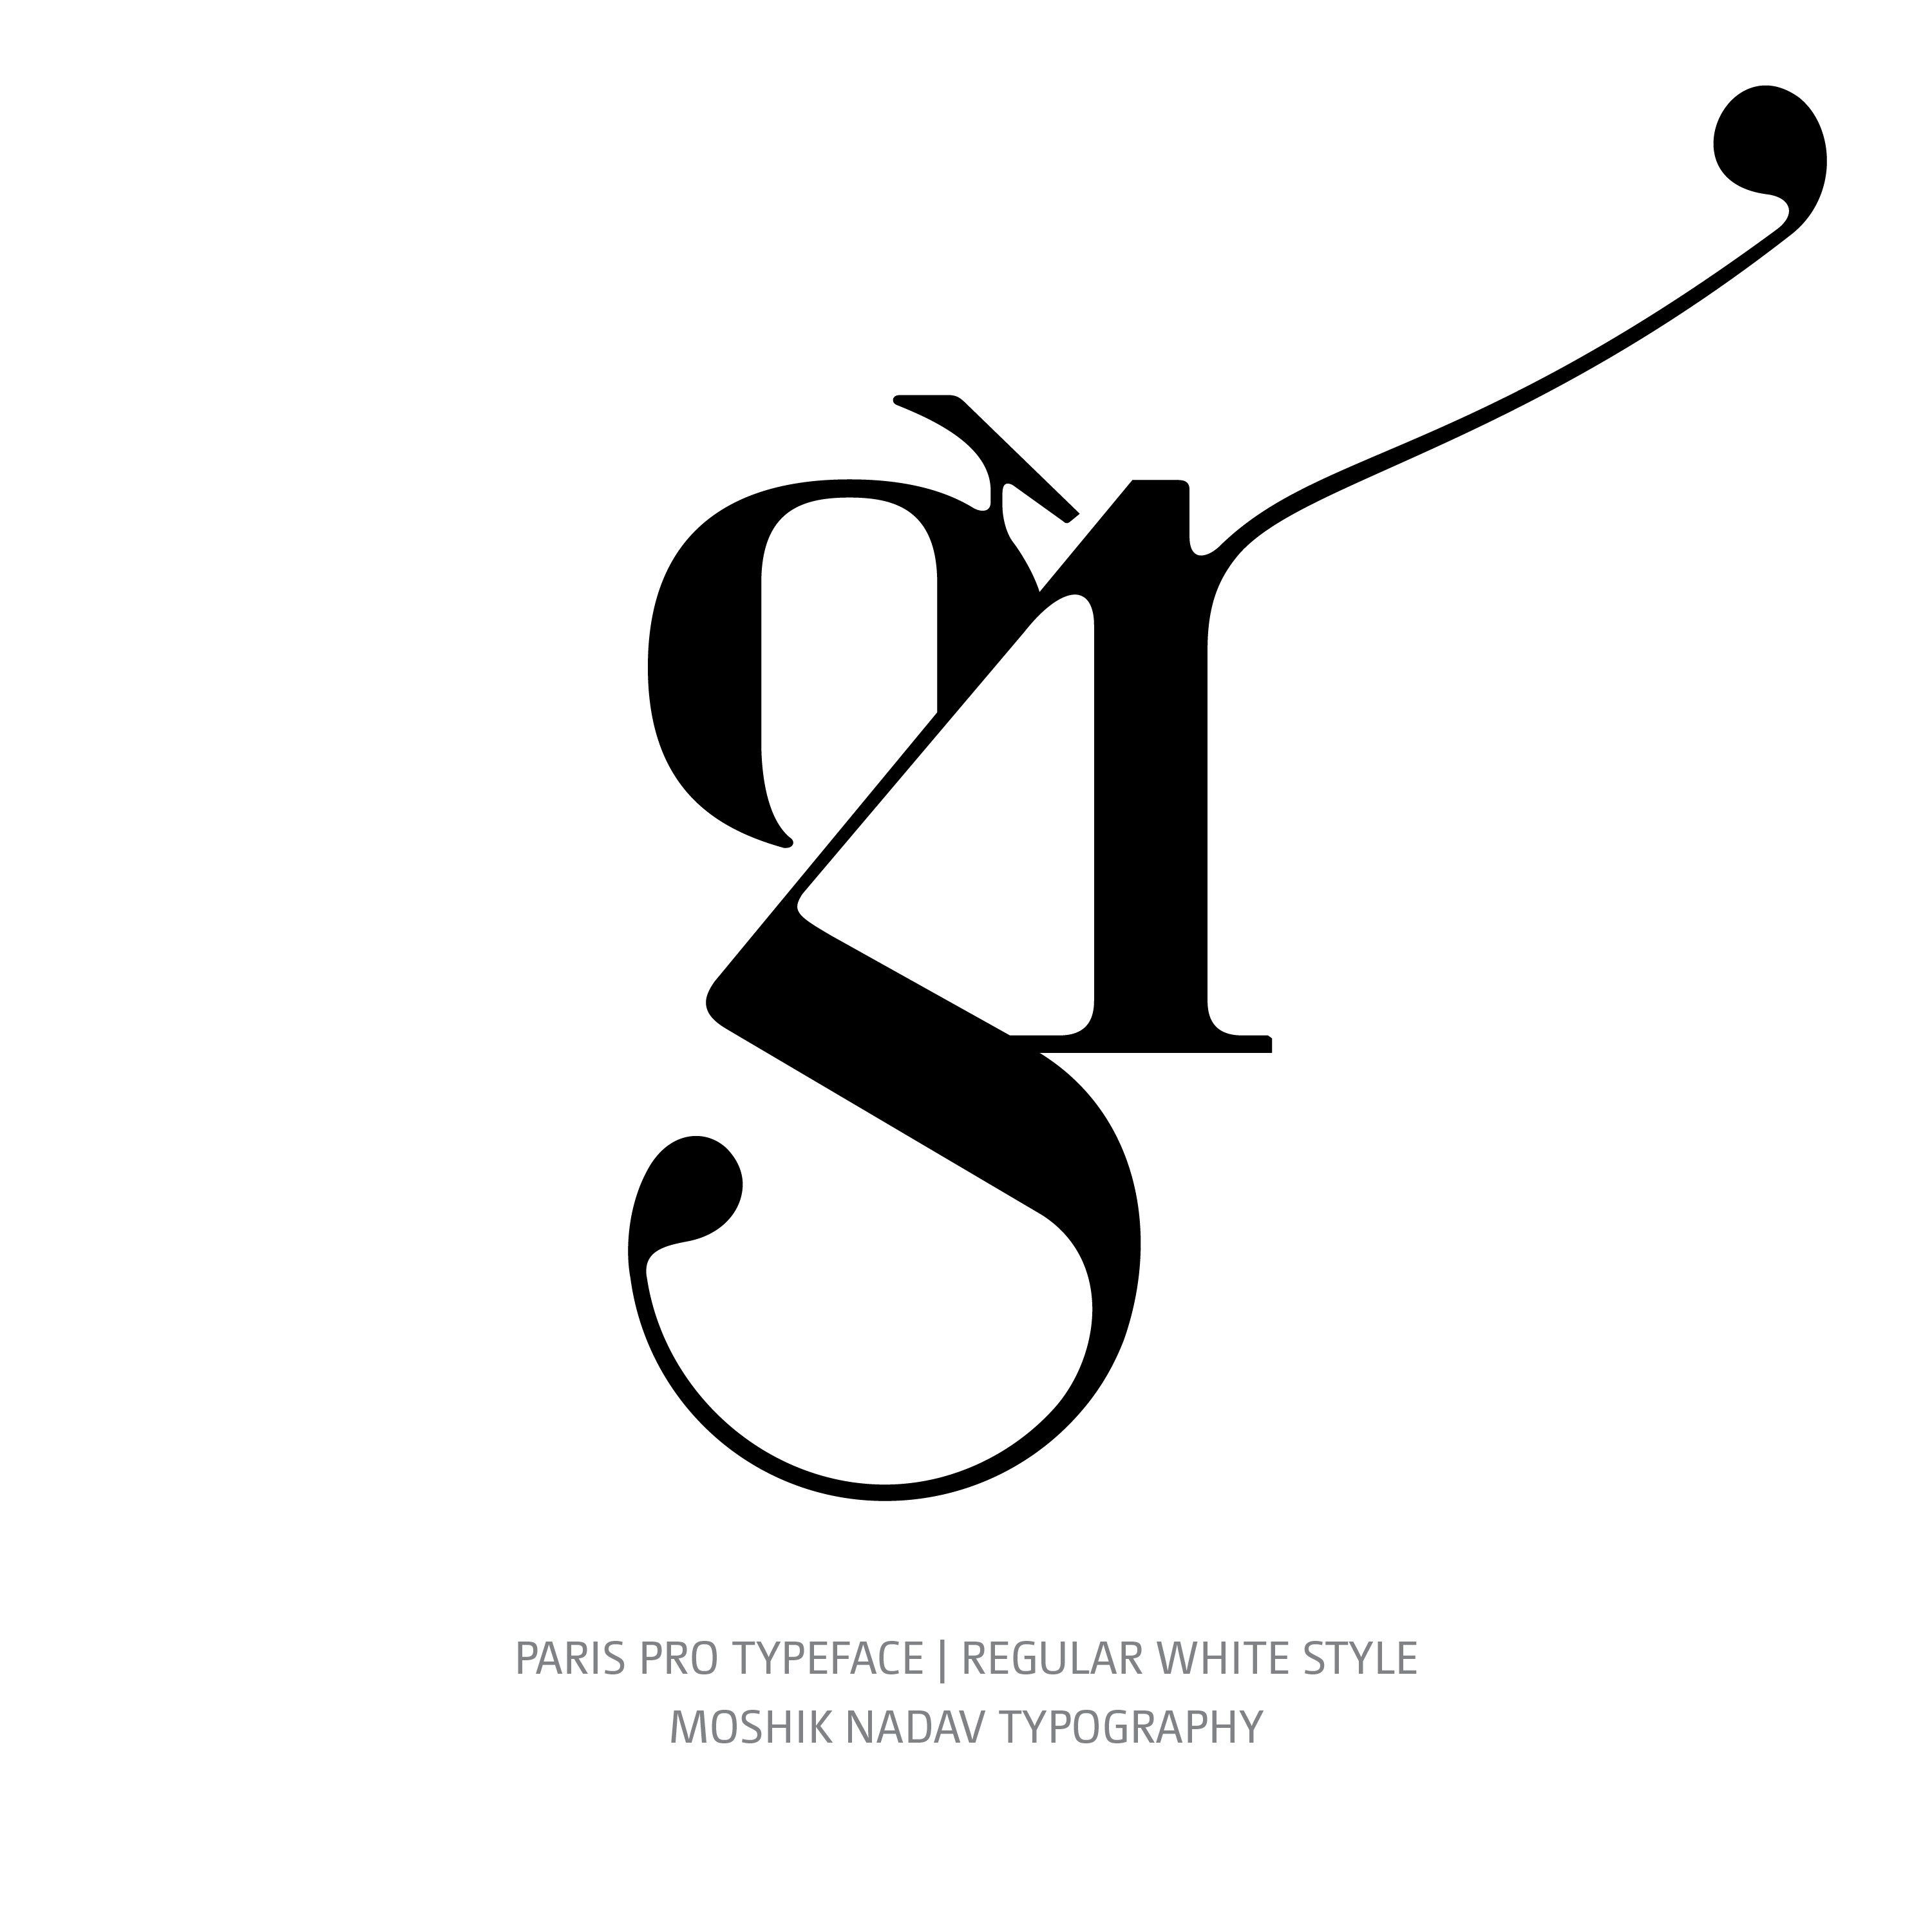 Paris Pro Typeface Regular White gr ligature